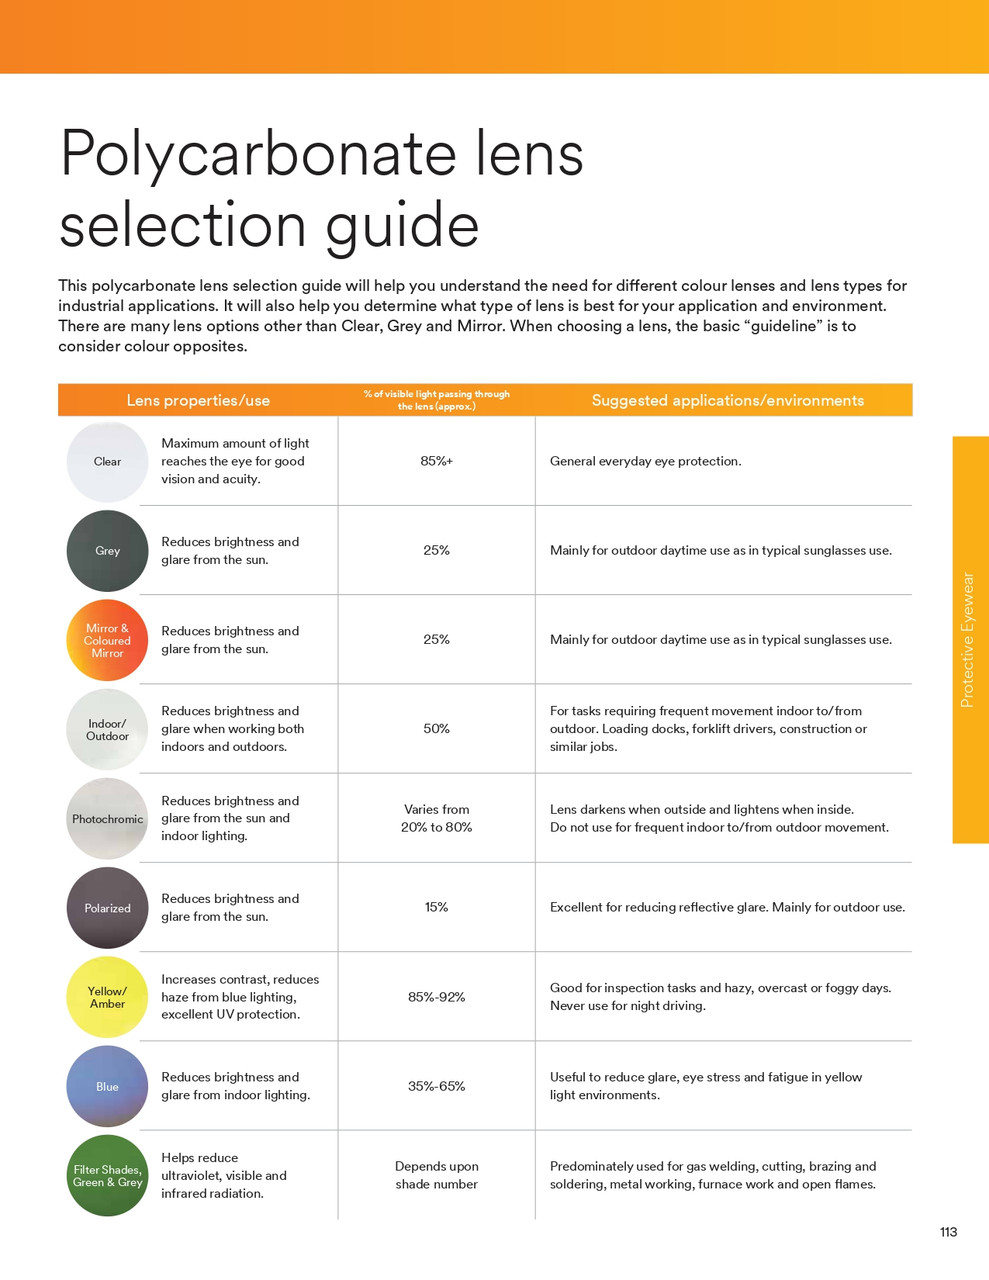 Securefit® 400X Series Safety Glasses w/Orange Mirror Lens  SF416XAS-BLK